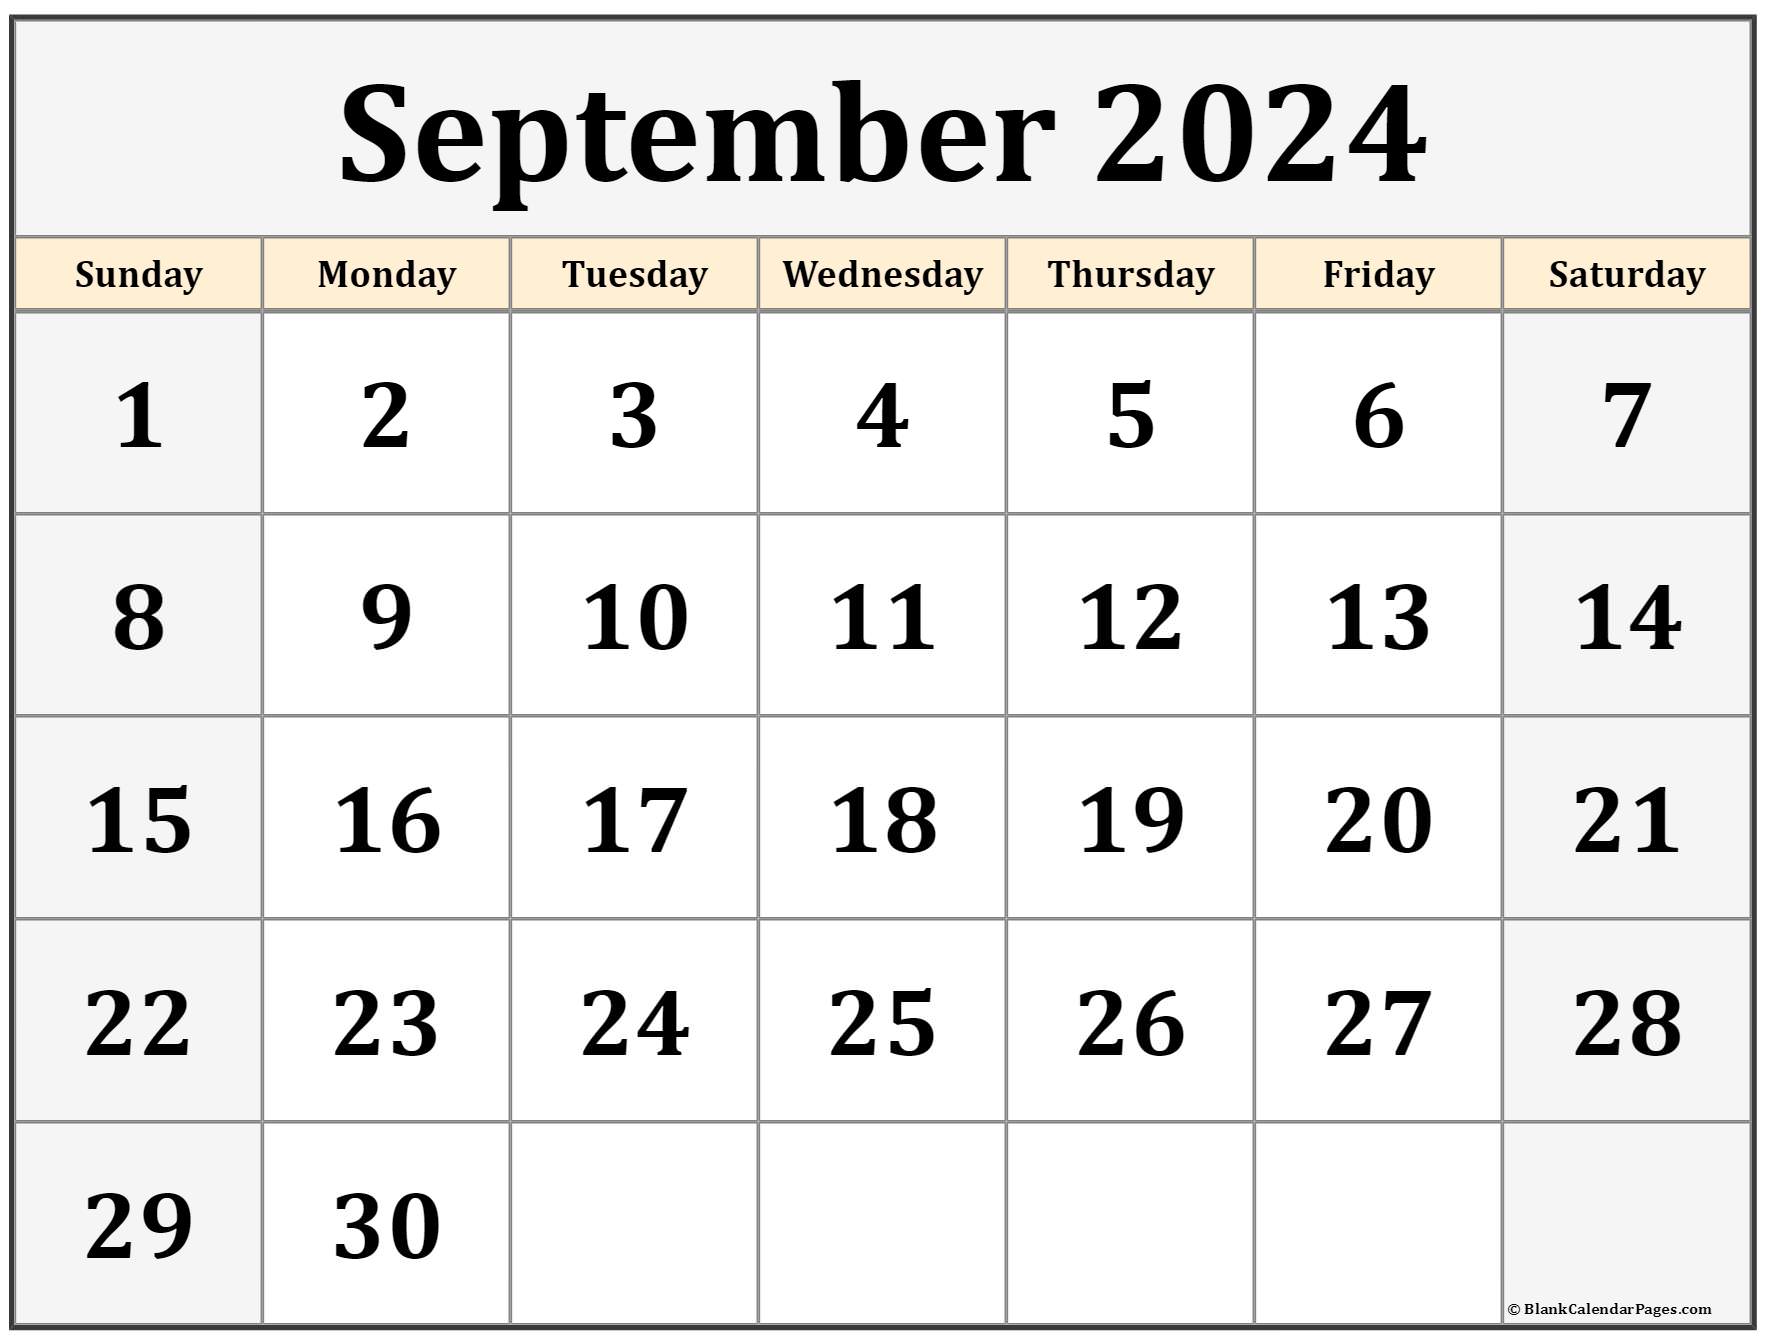 Calendar September 2024 Template Printable bianca cathrine